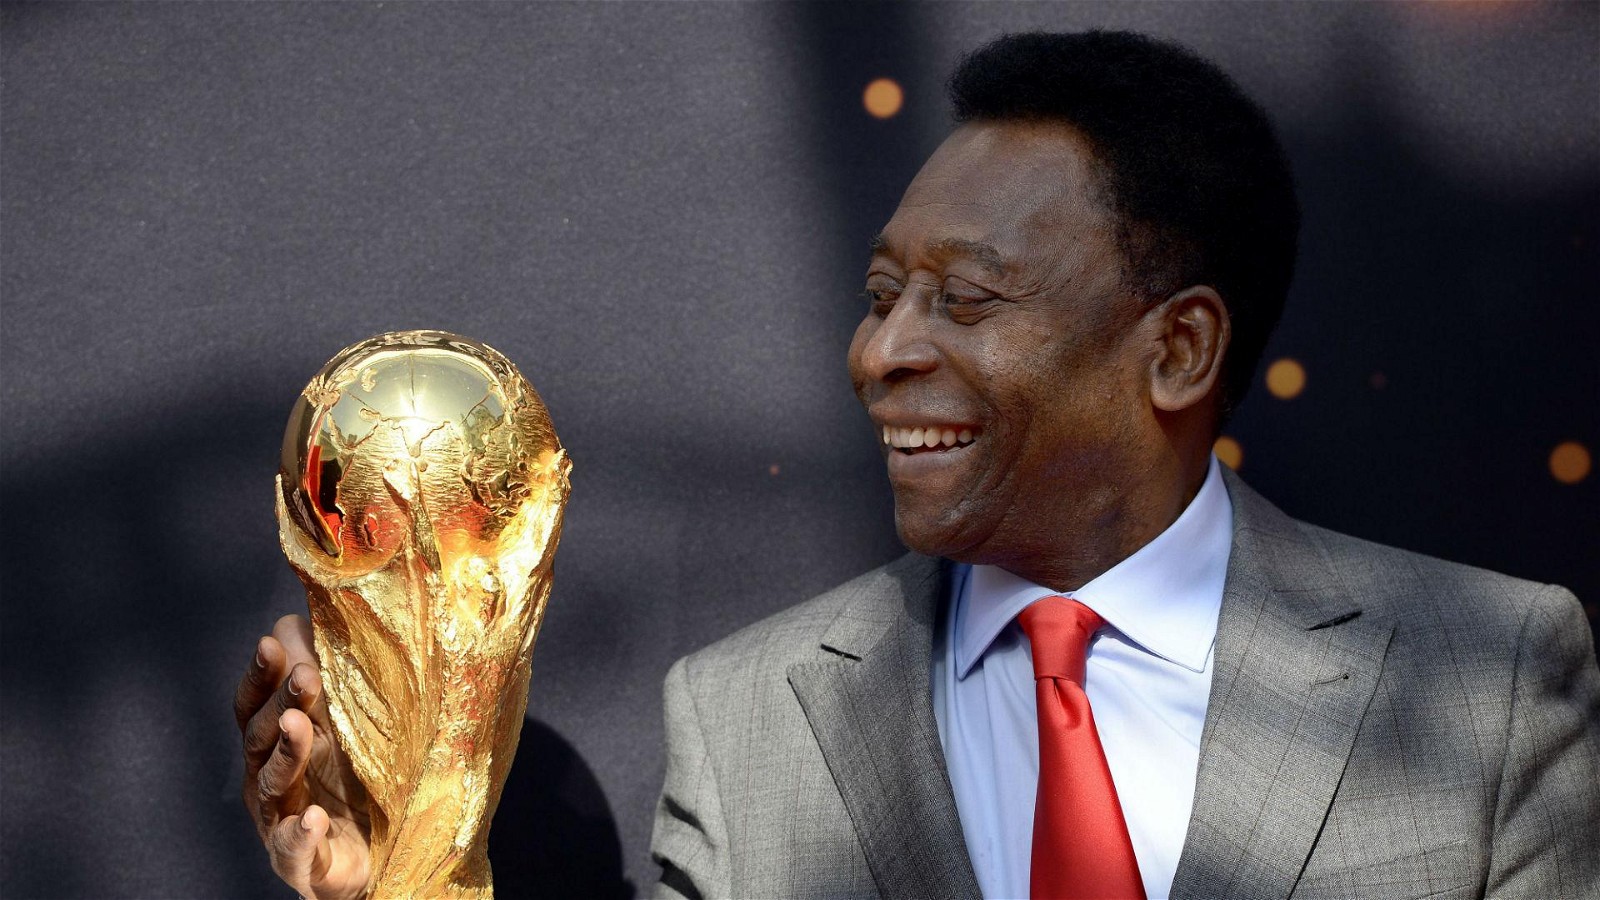 Pelé holds the world record of winning 3 FIFA World Cups